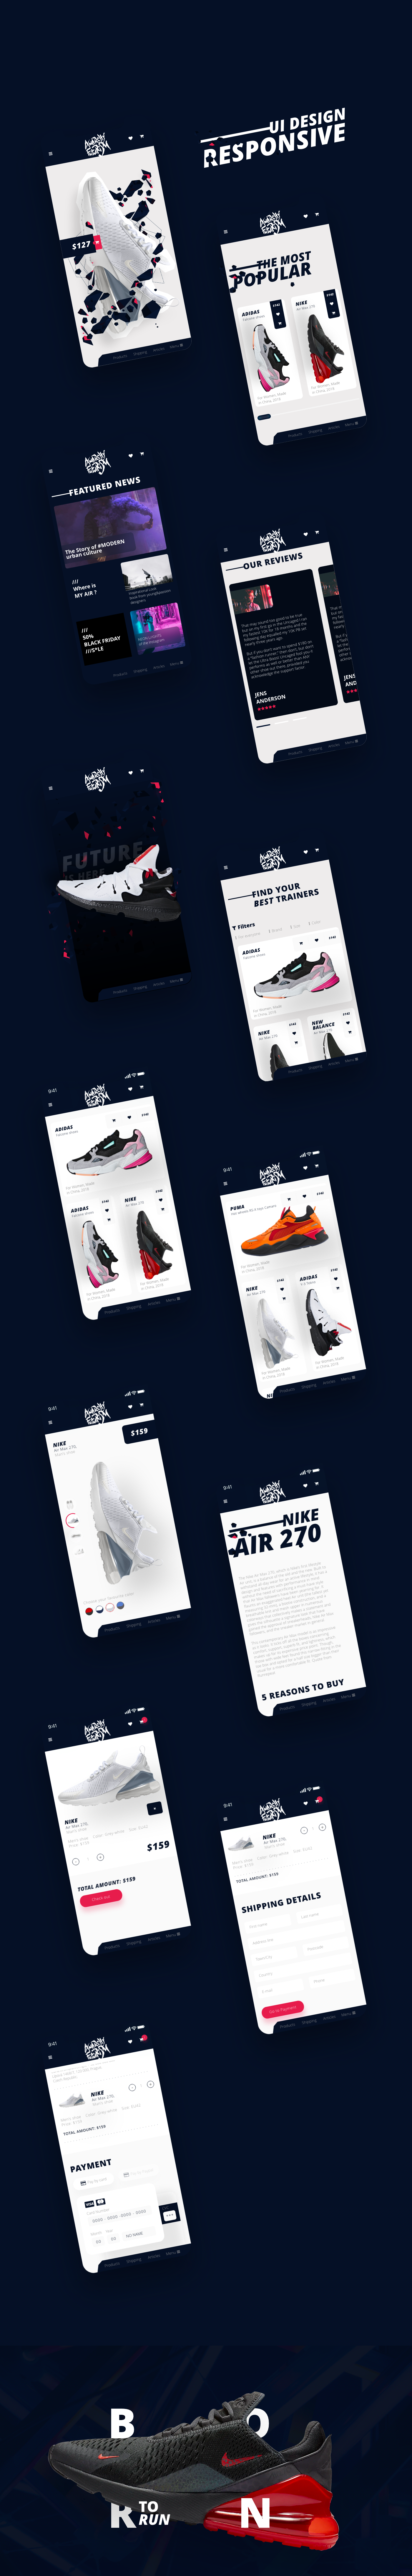 e-commerce adobexd free freebie download ui kit ux shoes Nike store